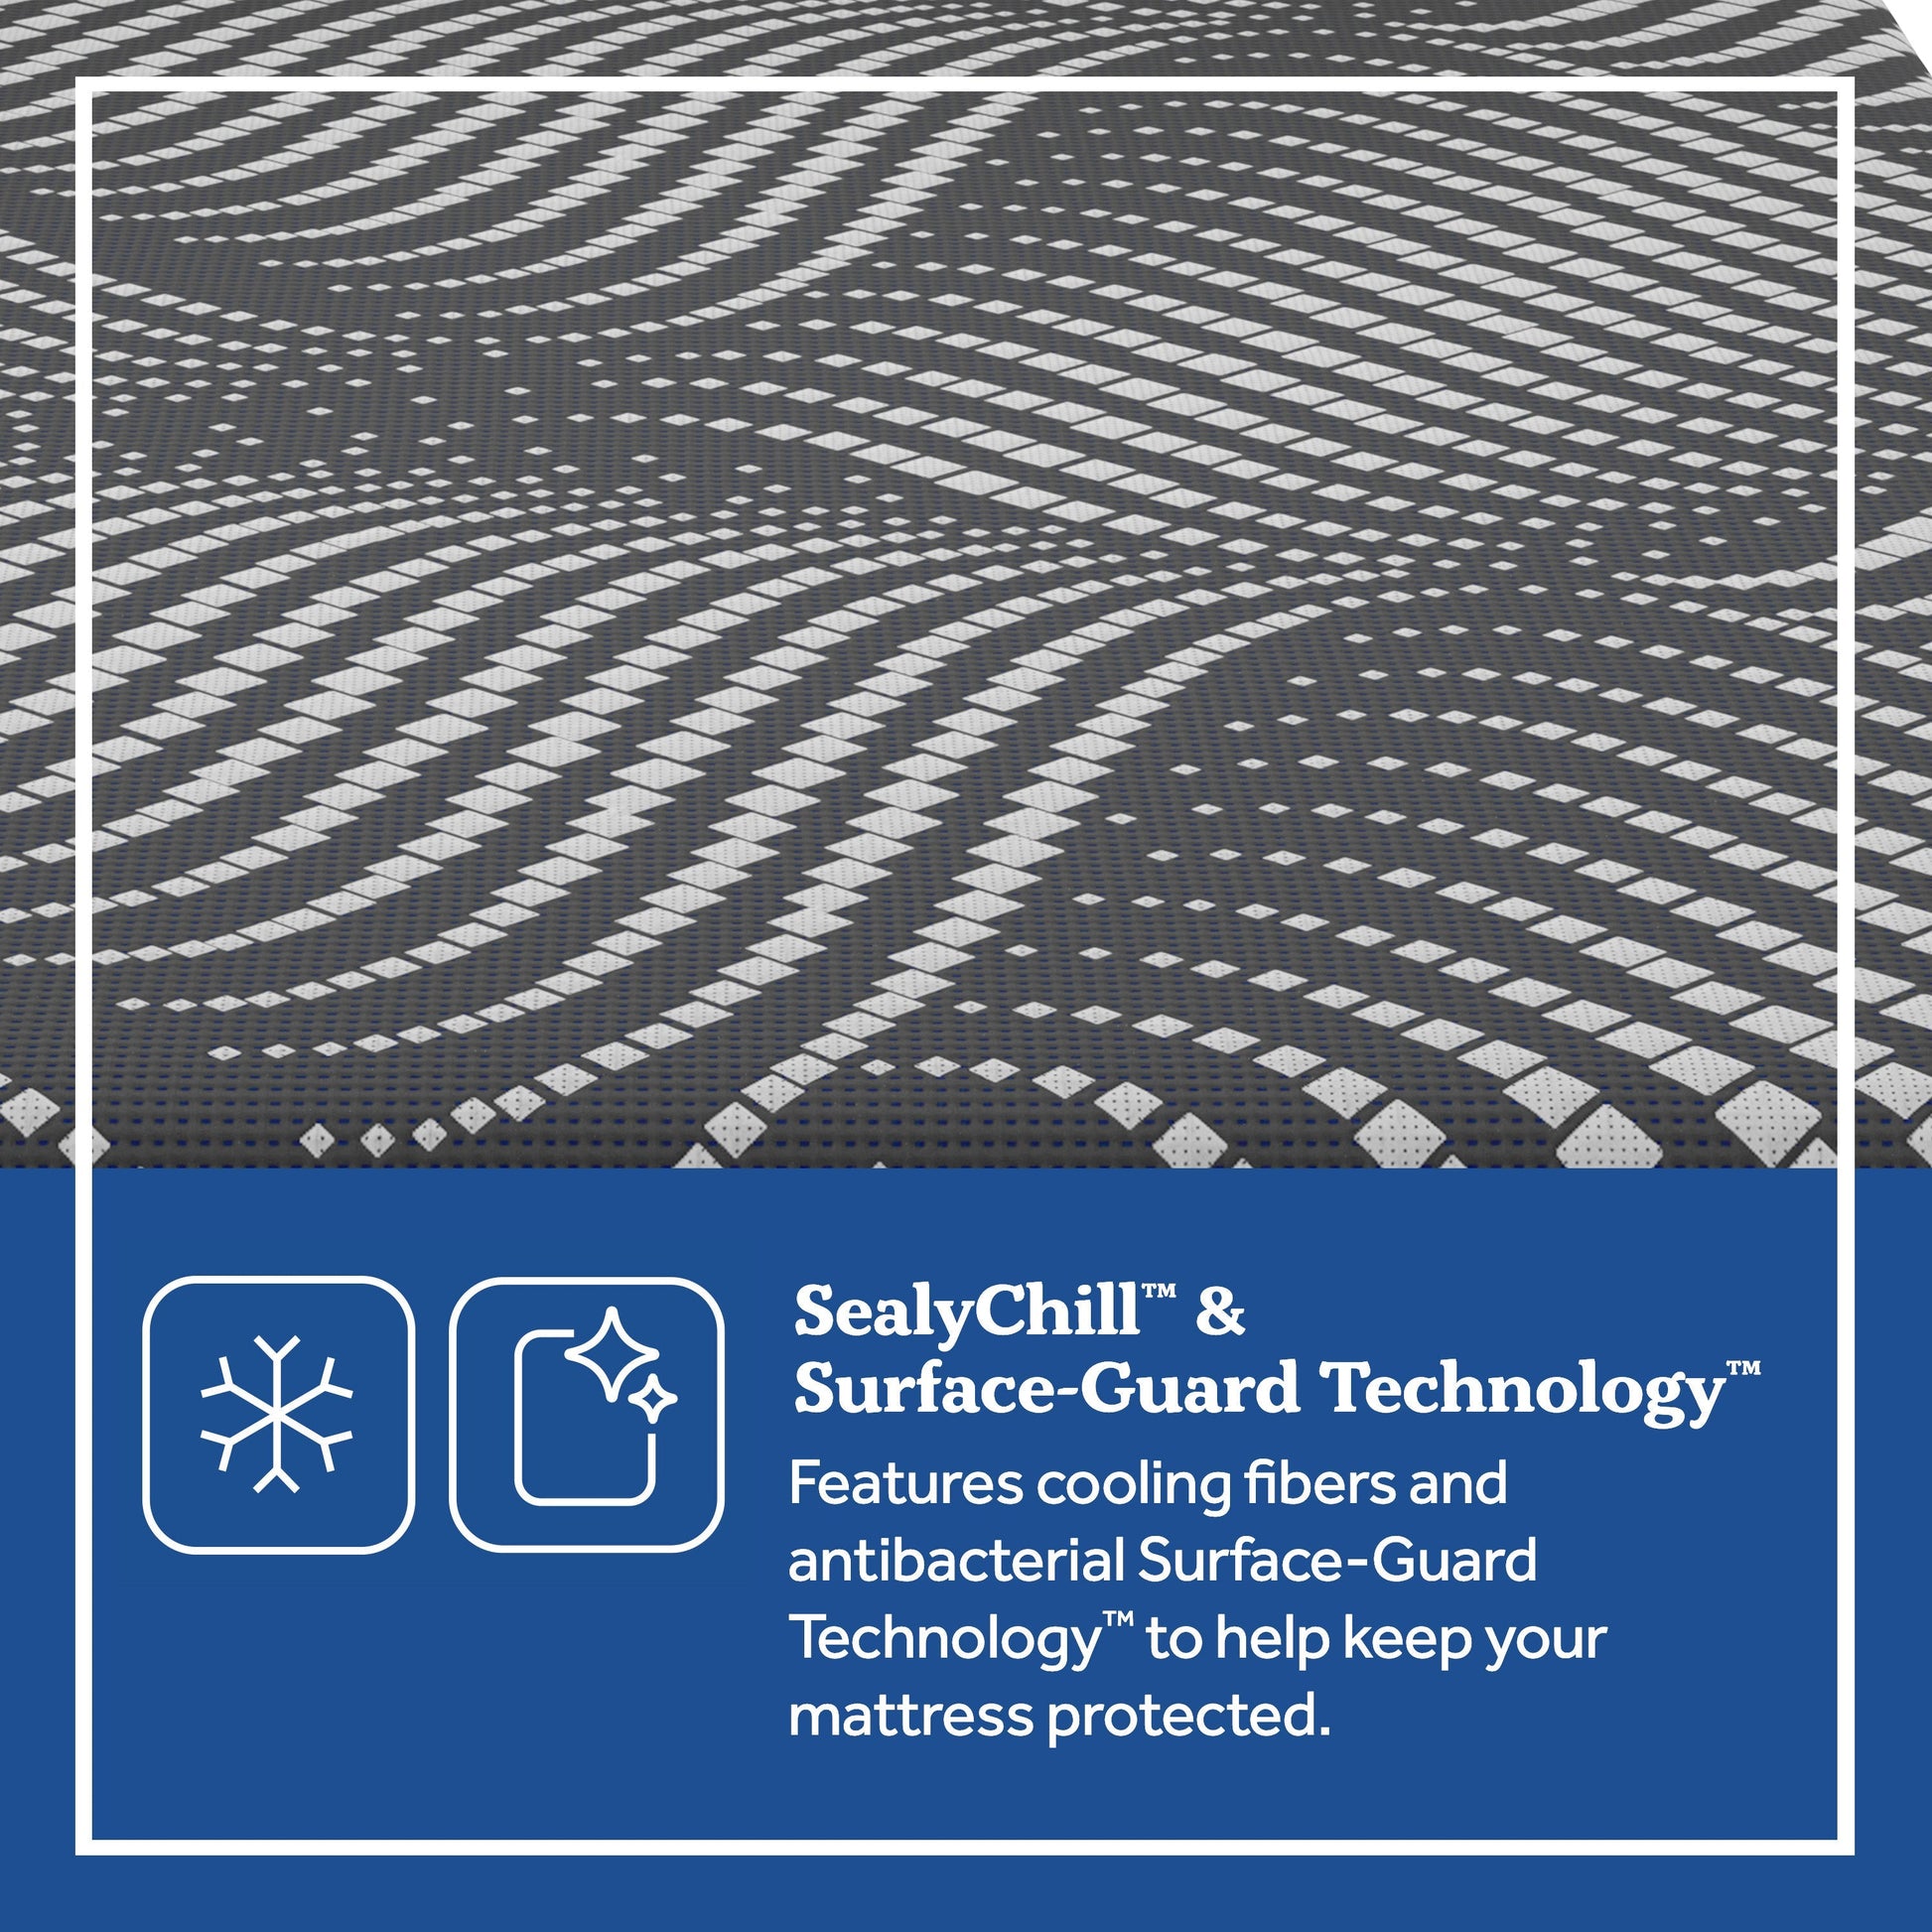 Sealy High Point Ultra Soft Mattress SealyChill Surface-Guard Technology badge